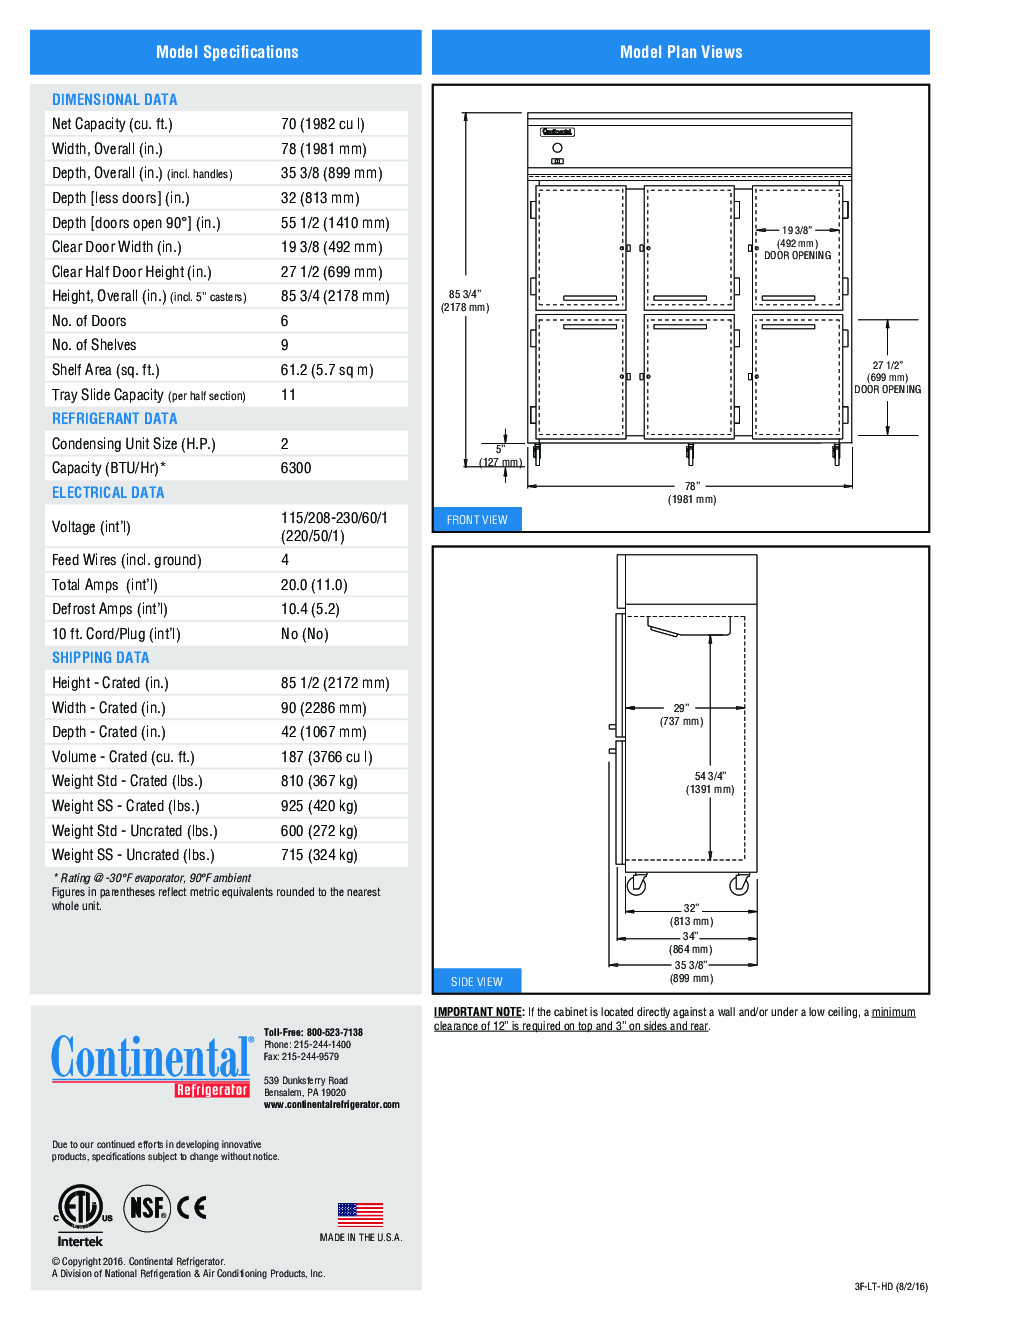 Continental Refrigerator 3F-LT-HD Reach-In Low Temperature Freezer